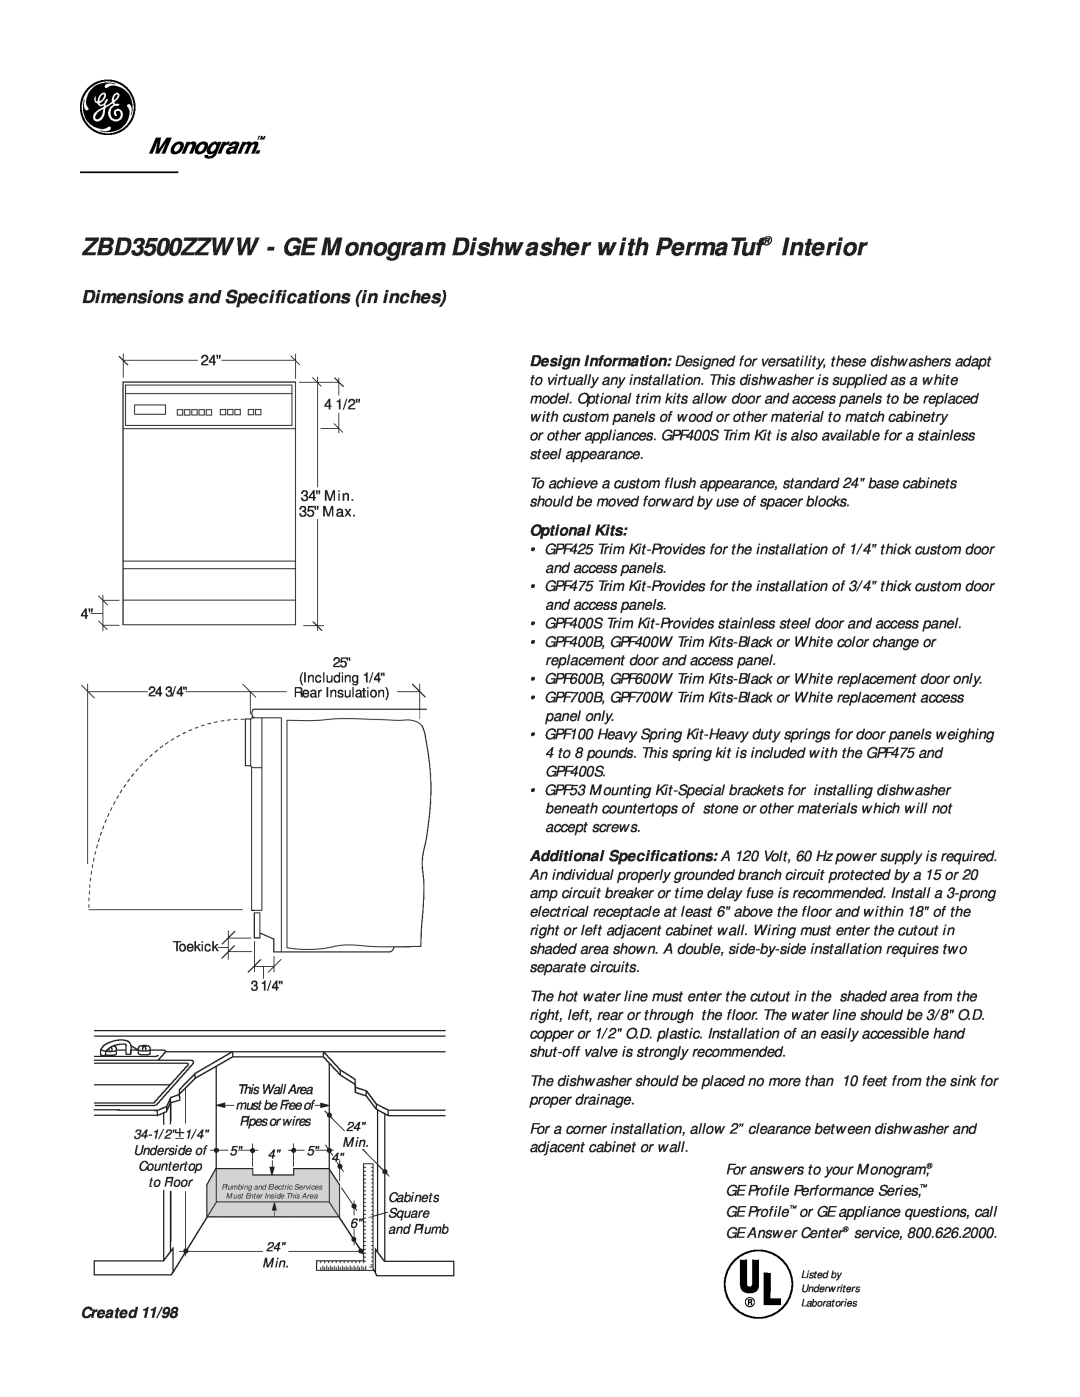 GE Monogram dimensions ZBD3500ZZWW - GE Monogram Dishwasher with PermaTuf Interior, Optional Kits, Created 11/98 